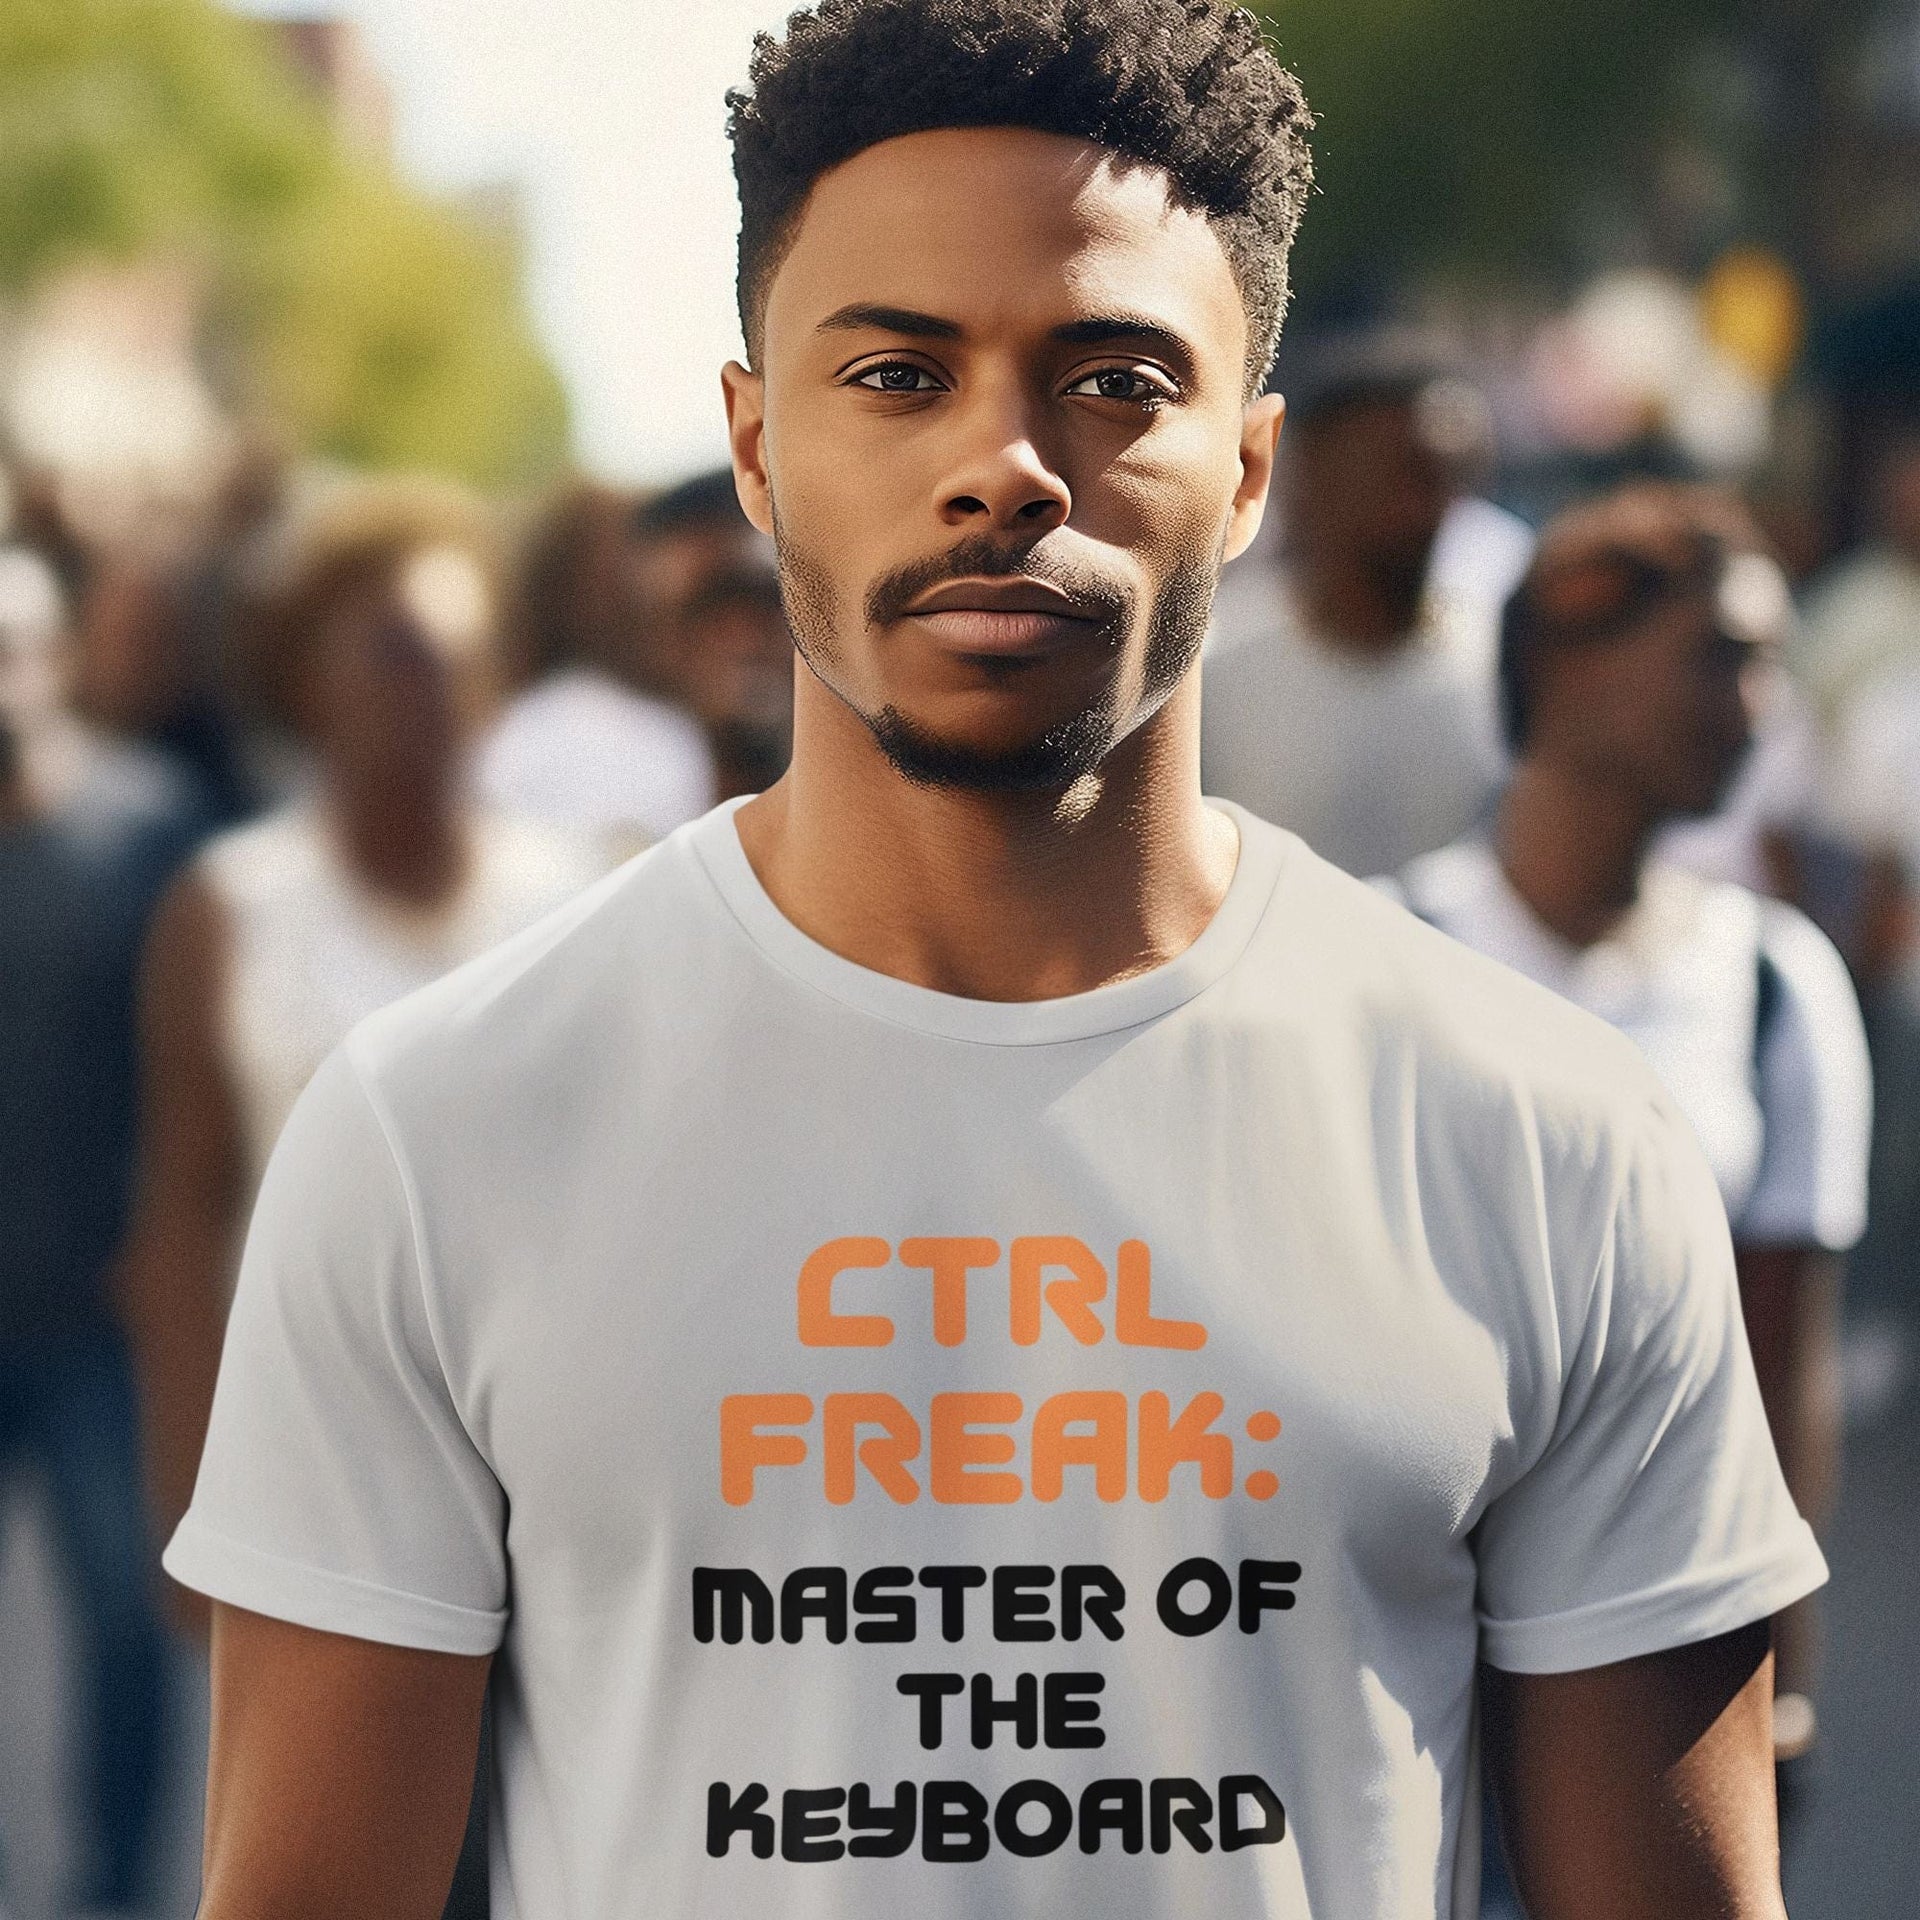 Ctrl Freak: Master of the Keyboard - Men's T-Shirt